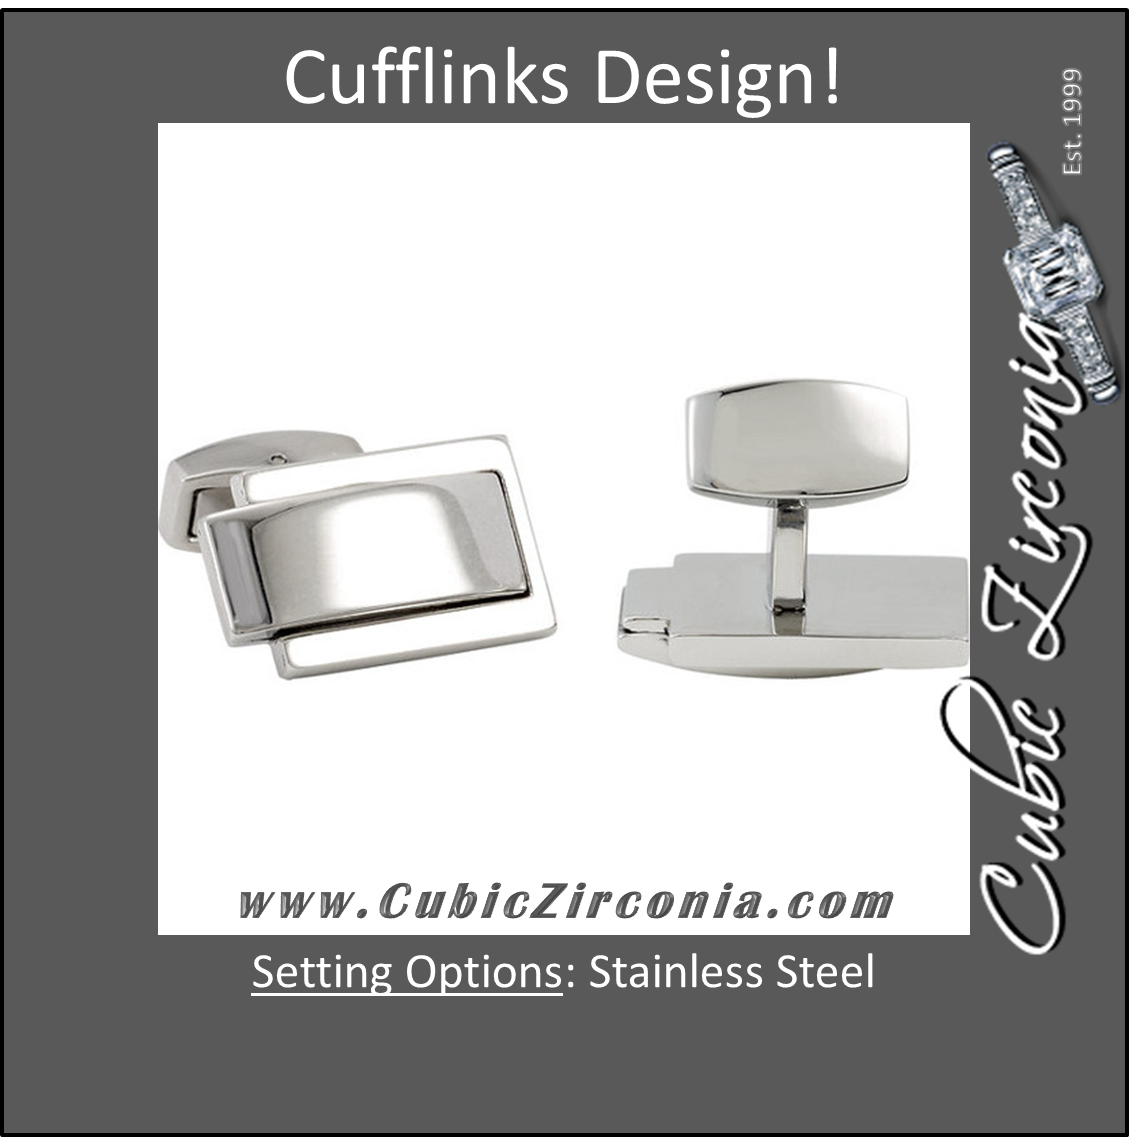 Men’s Cufflinks- Stainless Steel with Raised 3D Center